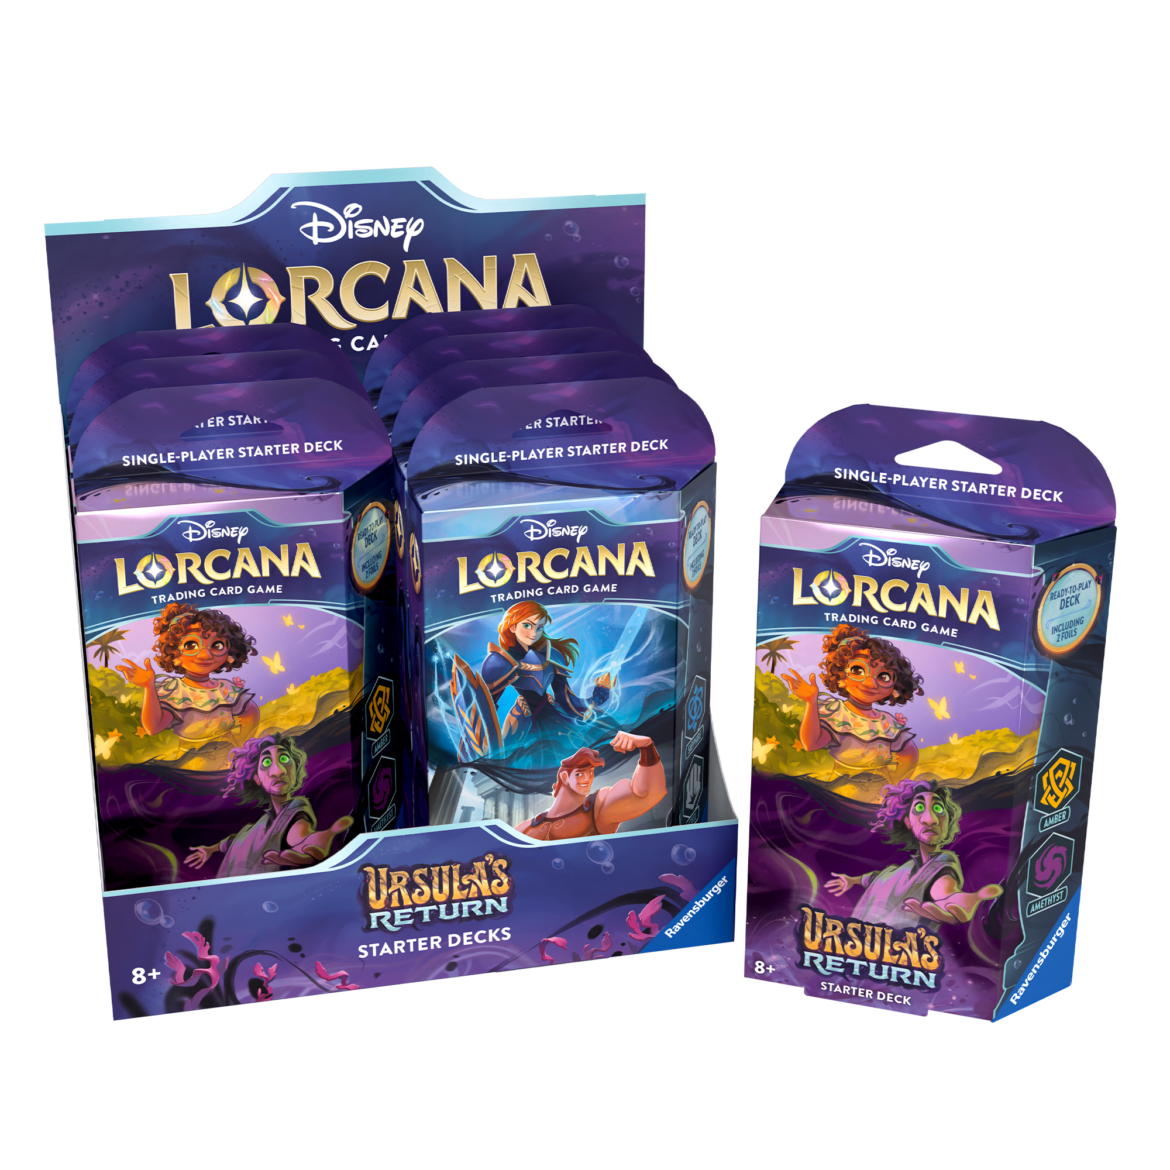 Ursulas Return Starter Decks add exciting Cards and Mechanics to Lorcana